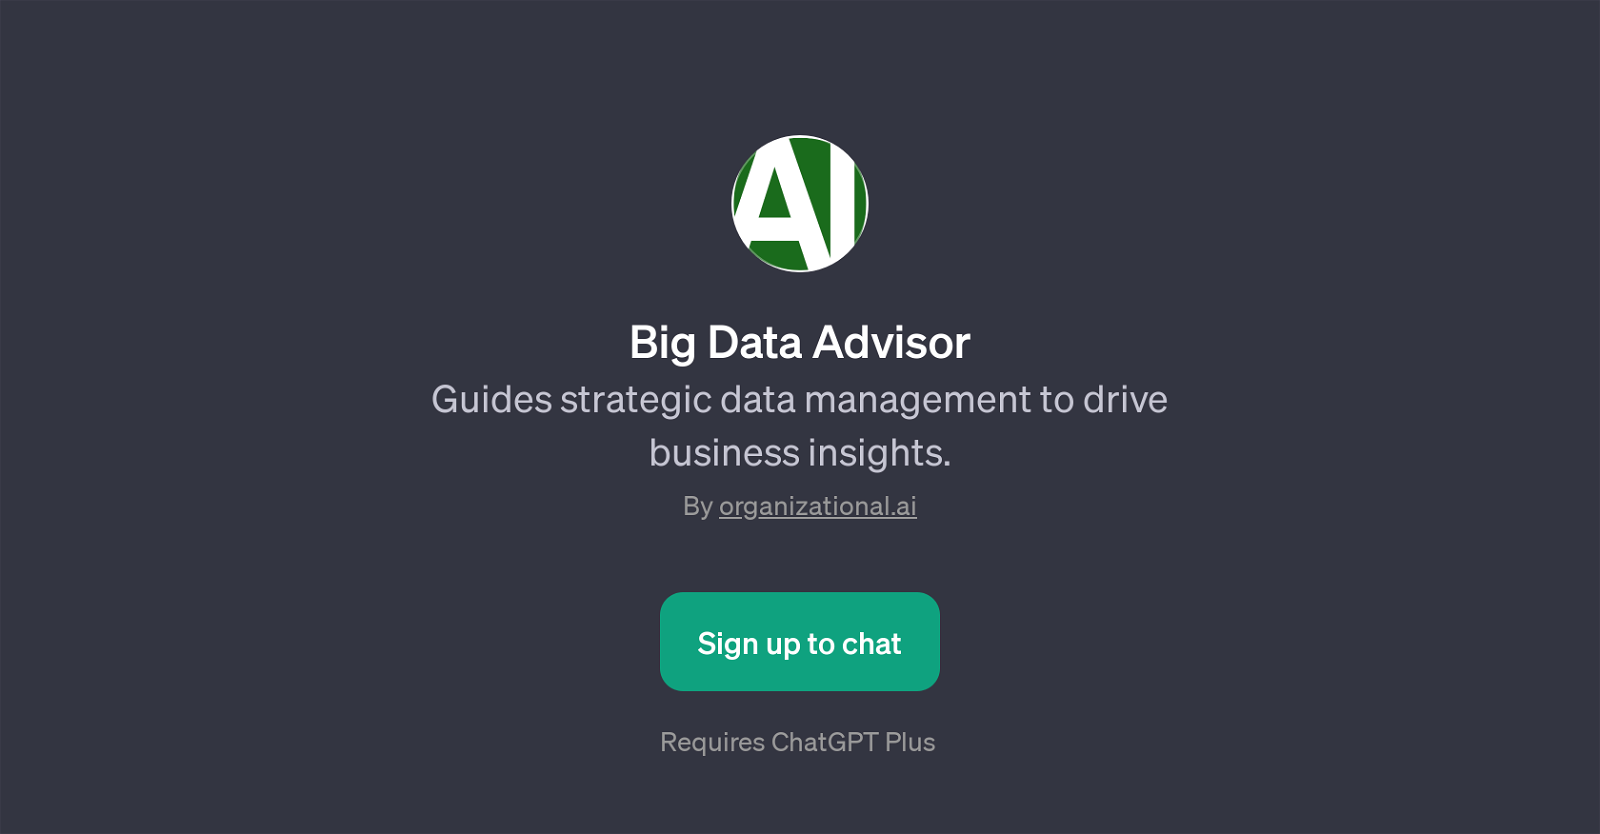 Big Data Advisor website